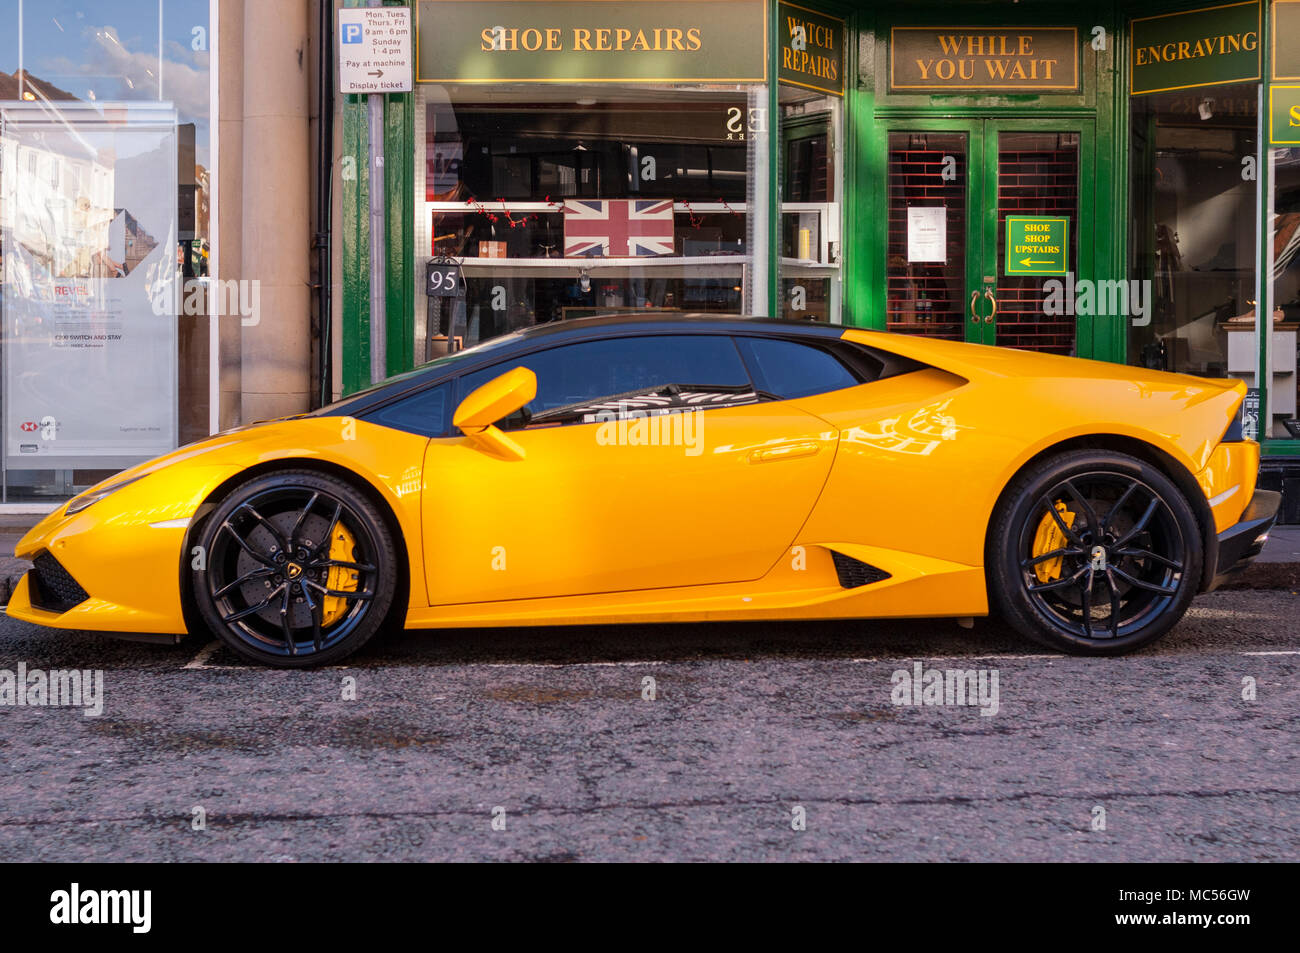 A yellow Lamborghini sports car in a uk street Stock Photo